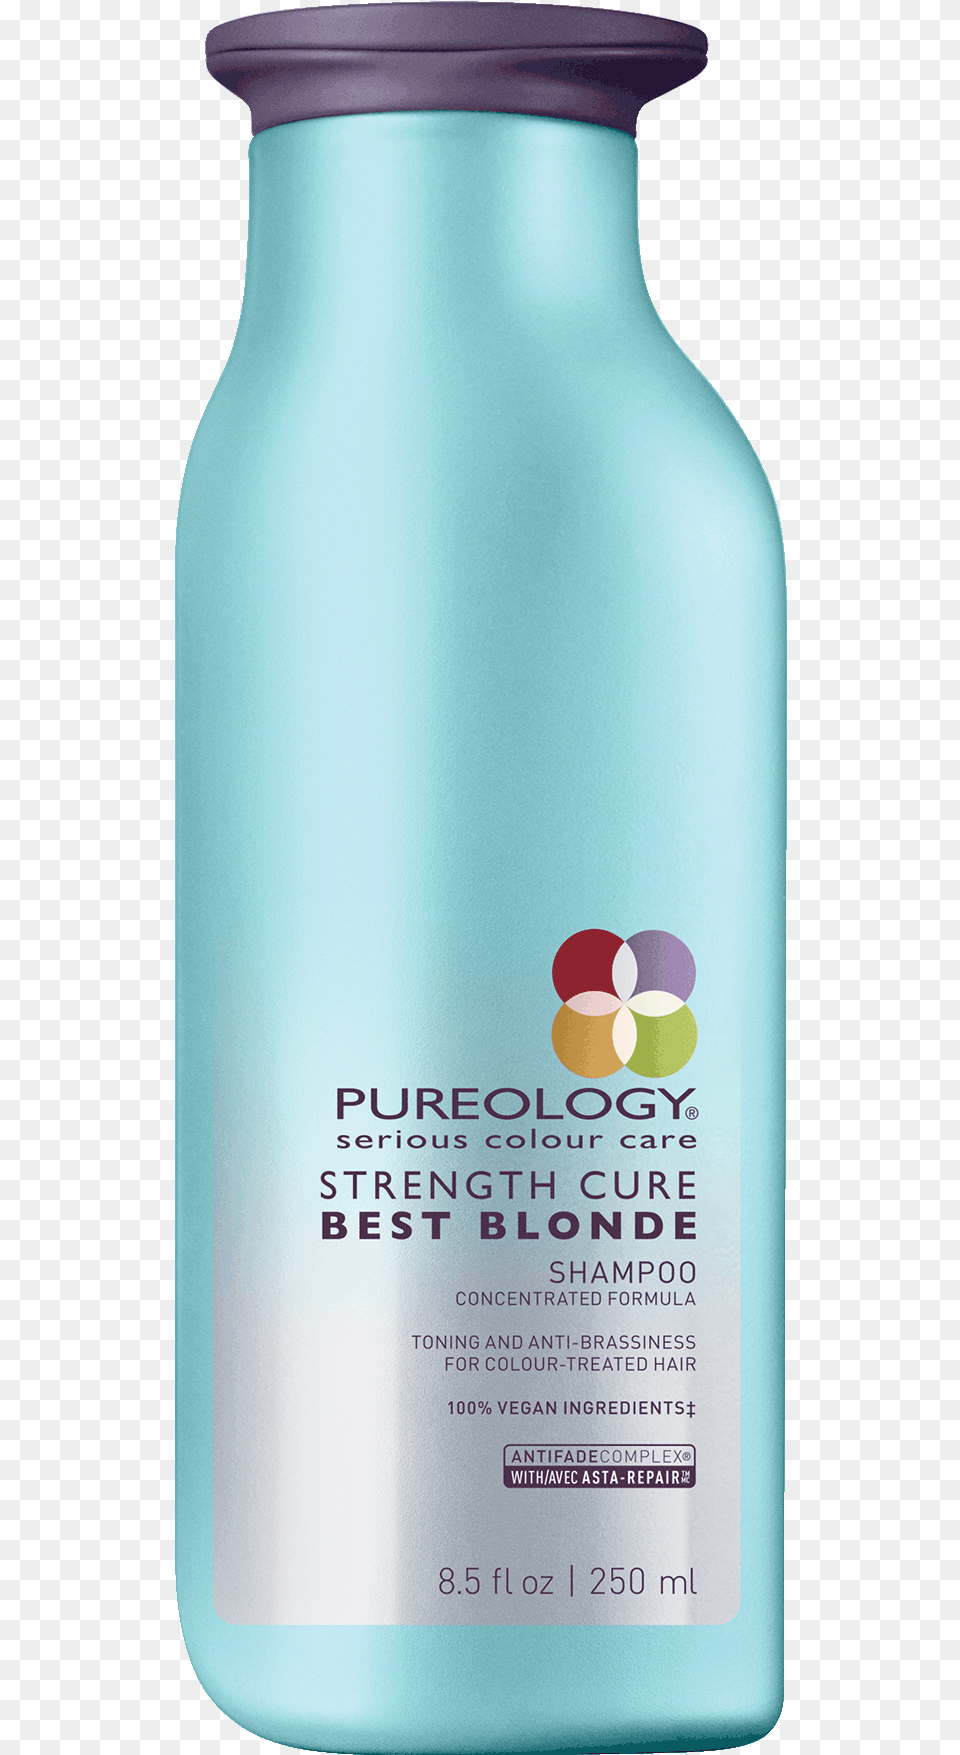 Pureology Strength Cure Best Blonde, Jar, Bottle Free Png Download